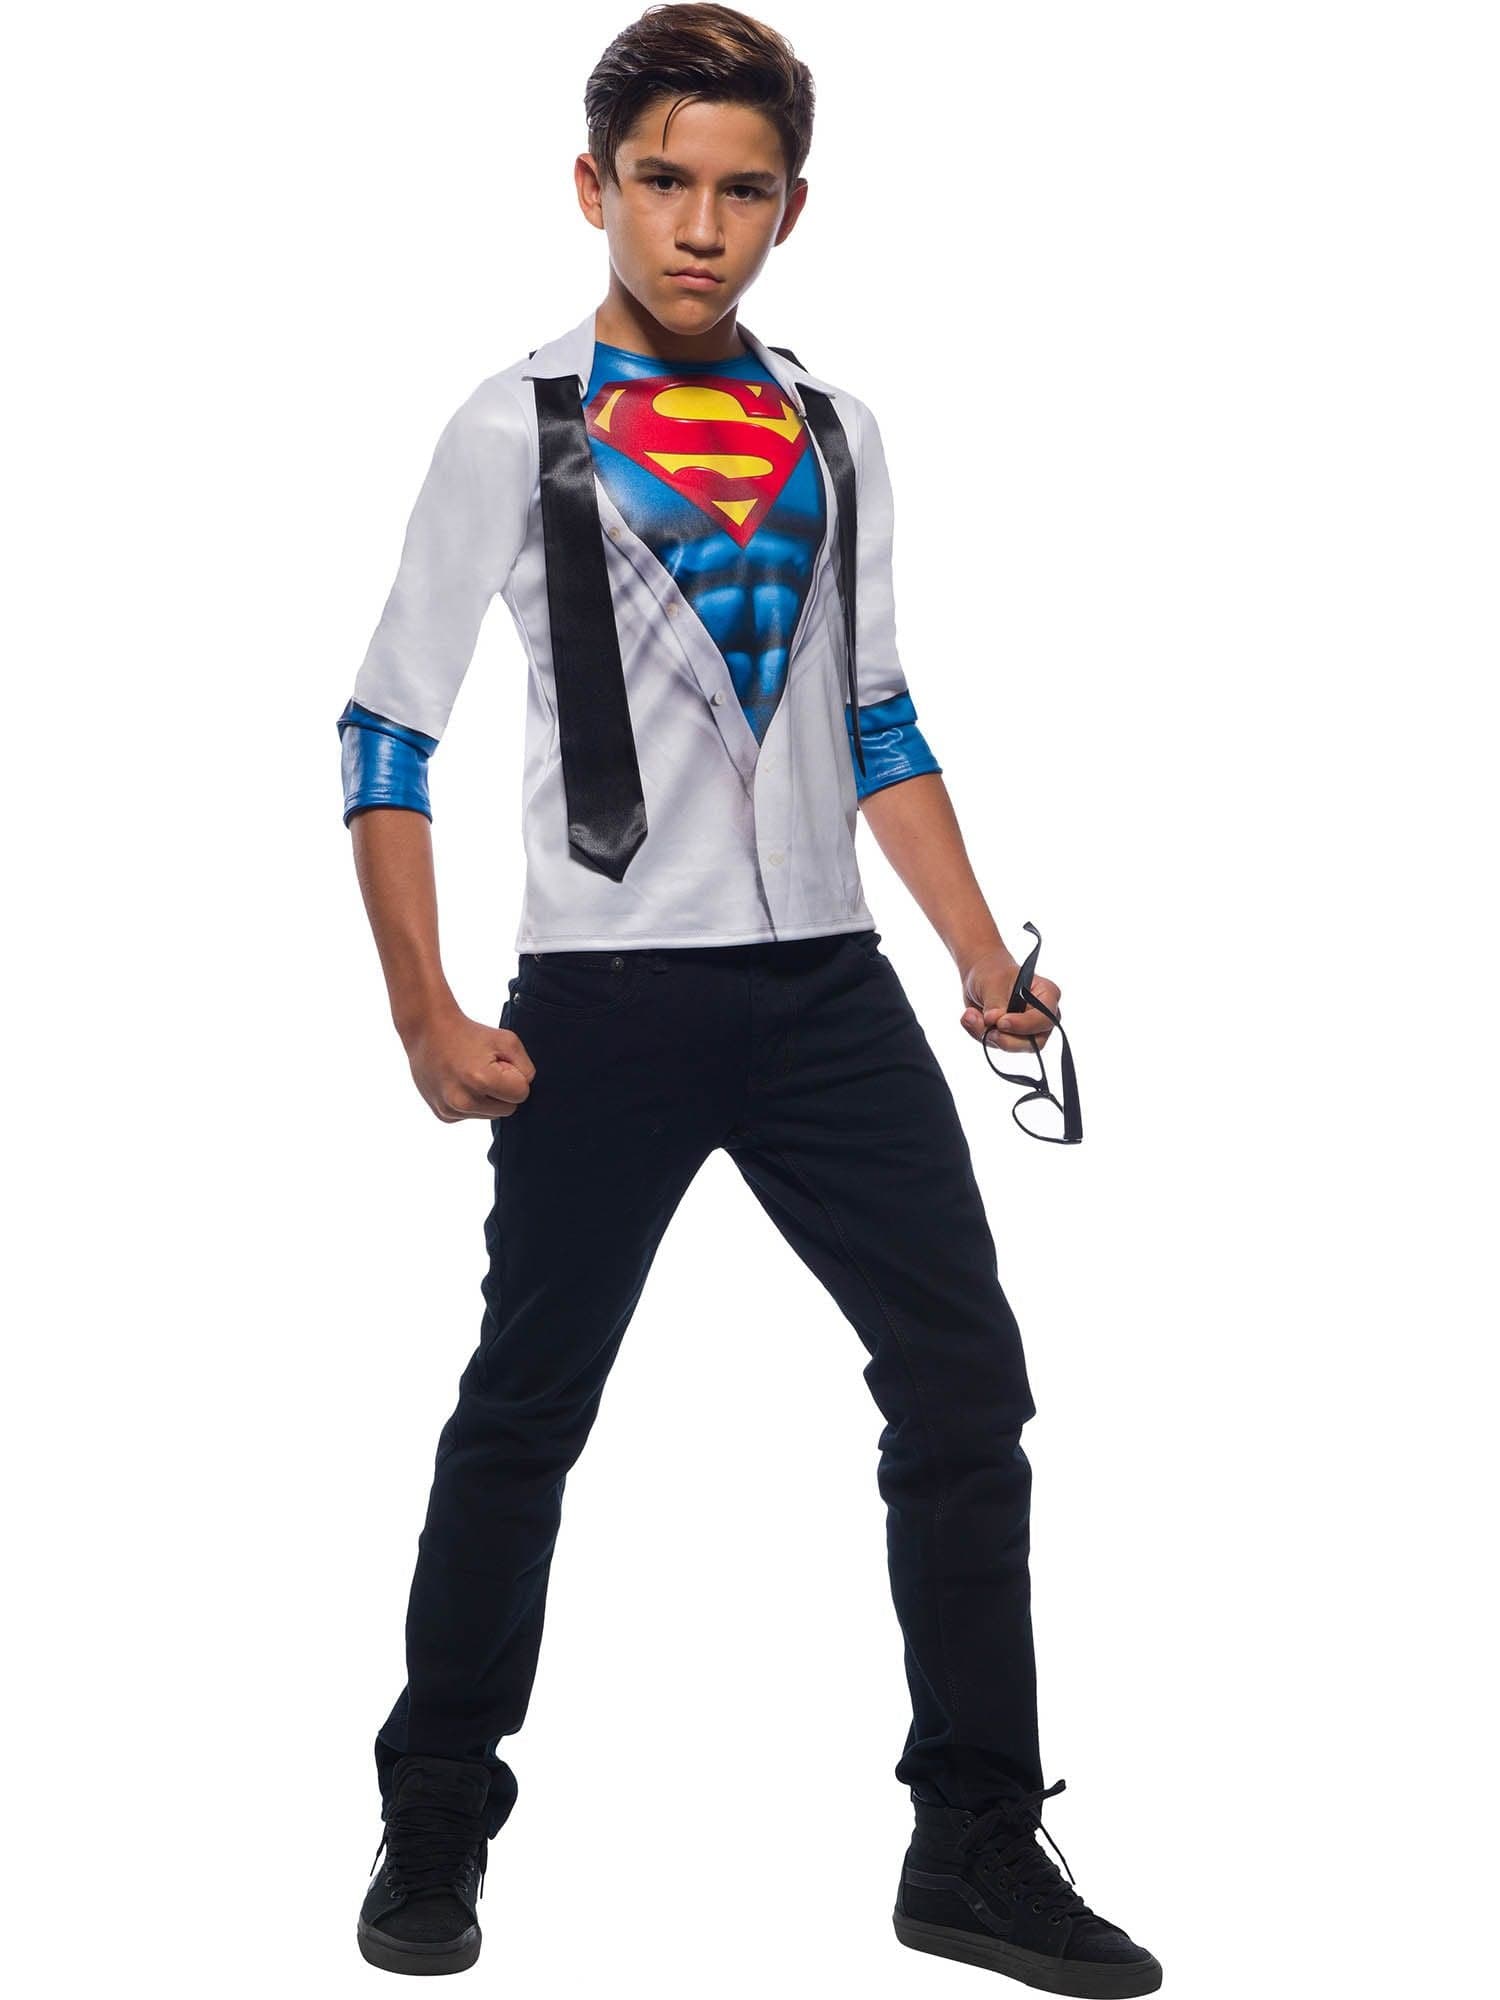 Kids Justice League Superman Costume - costumes.com